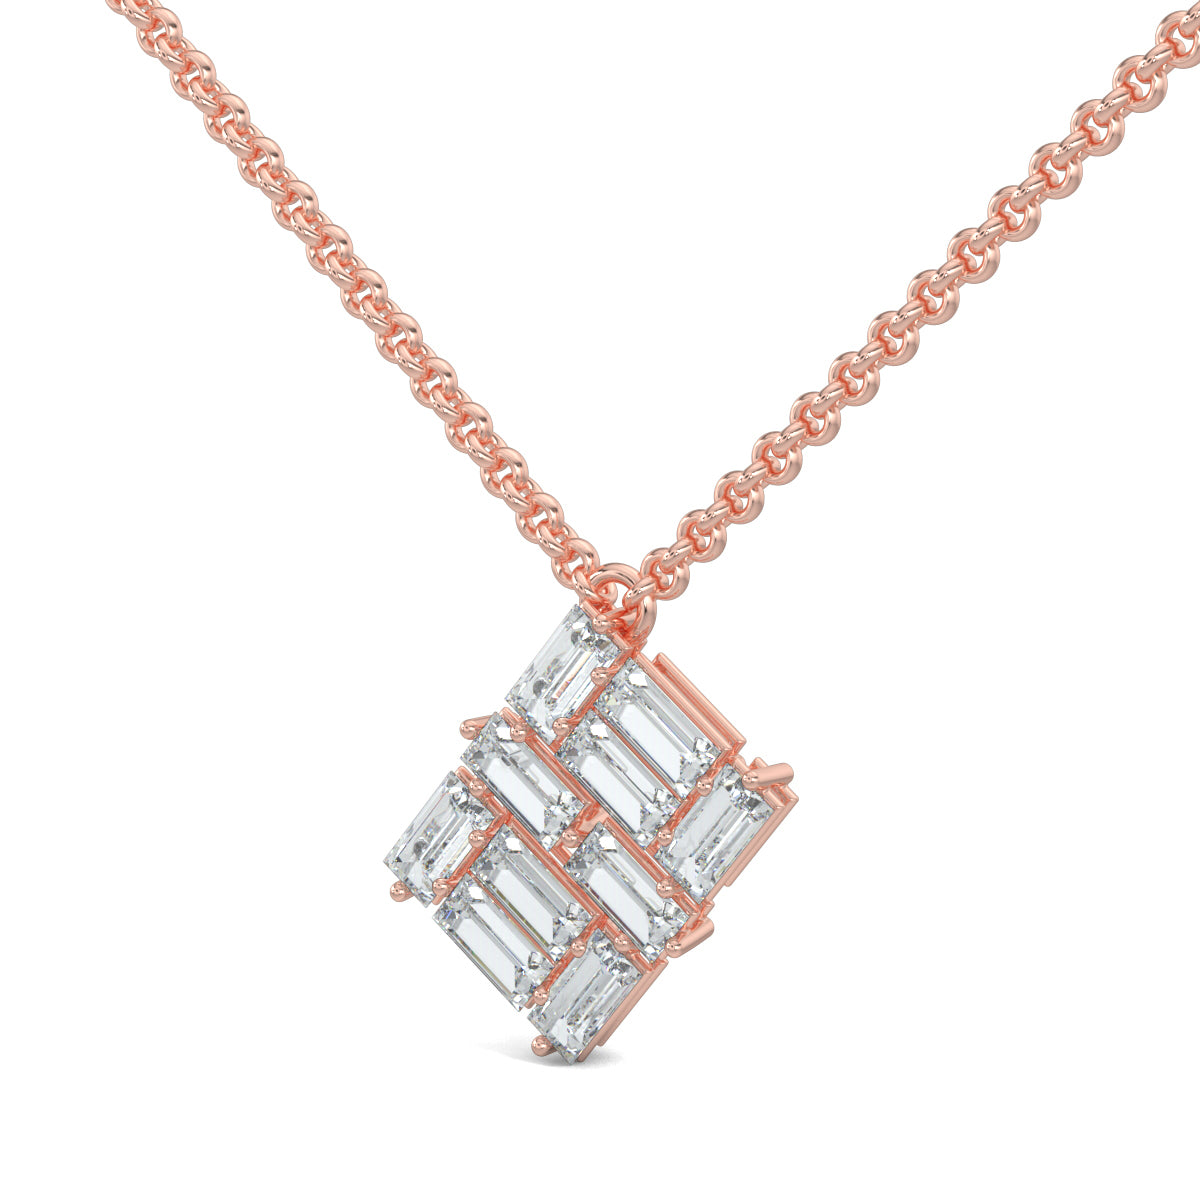 Rose Gold, Diamond pendants, Astral Luxe Pendant, natural diamonds, lab-grown diamonds, rectangle pendant, casual jewelry, elegant pendant, diamond jewelry.